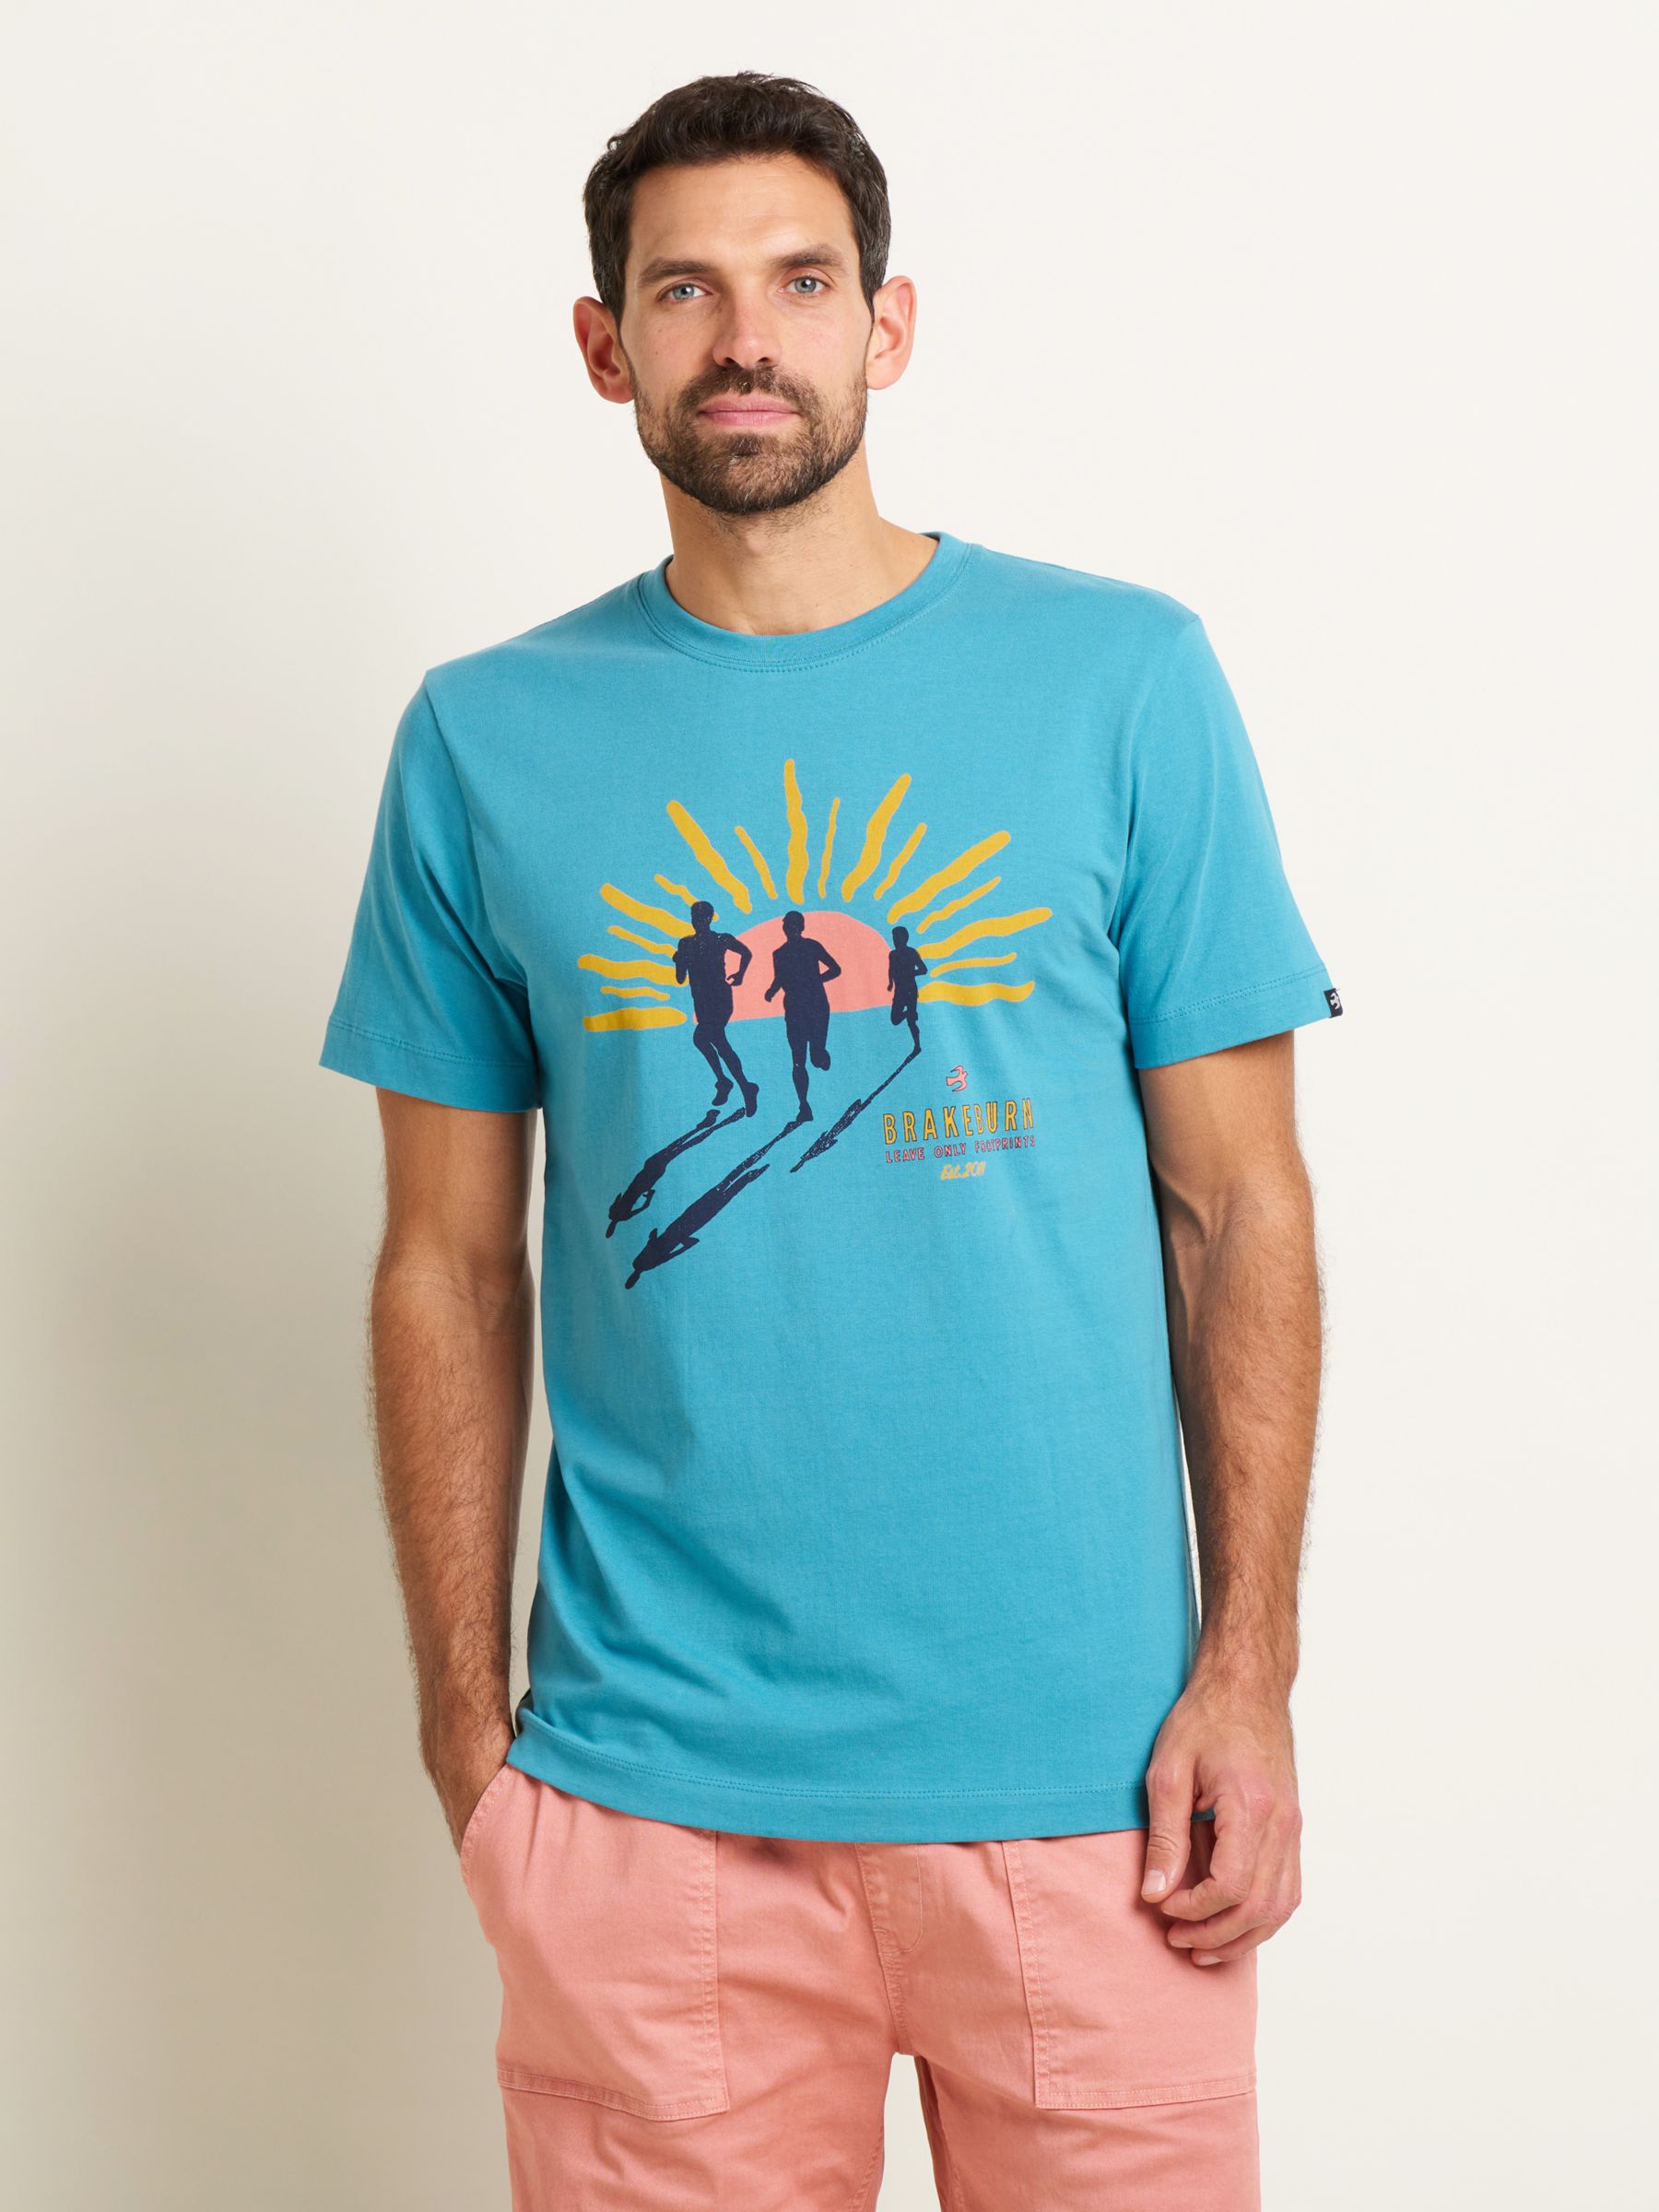 Brakeburn Runners Graphic T-Shirt, Blue, XL